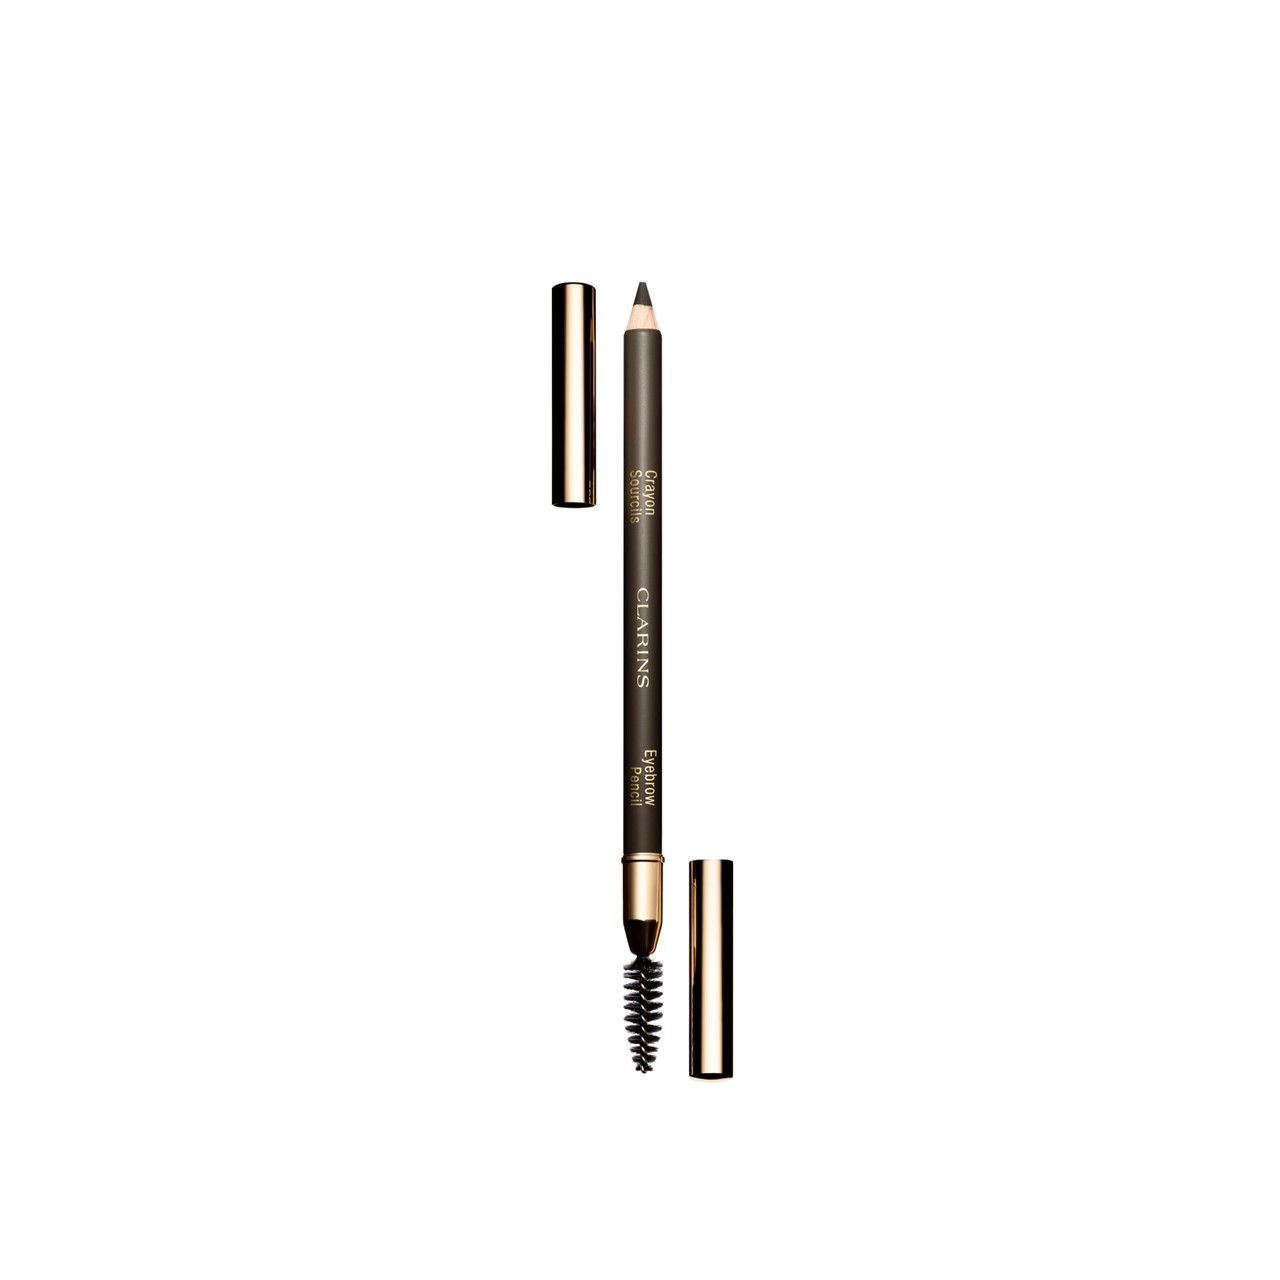 Clarins Eyebrow Pencil Long-Wearing 01 Dark Brown 1.1g